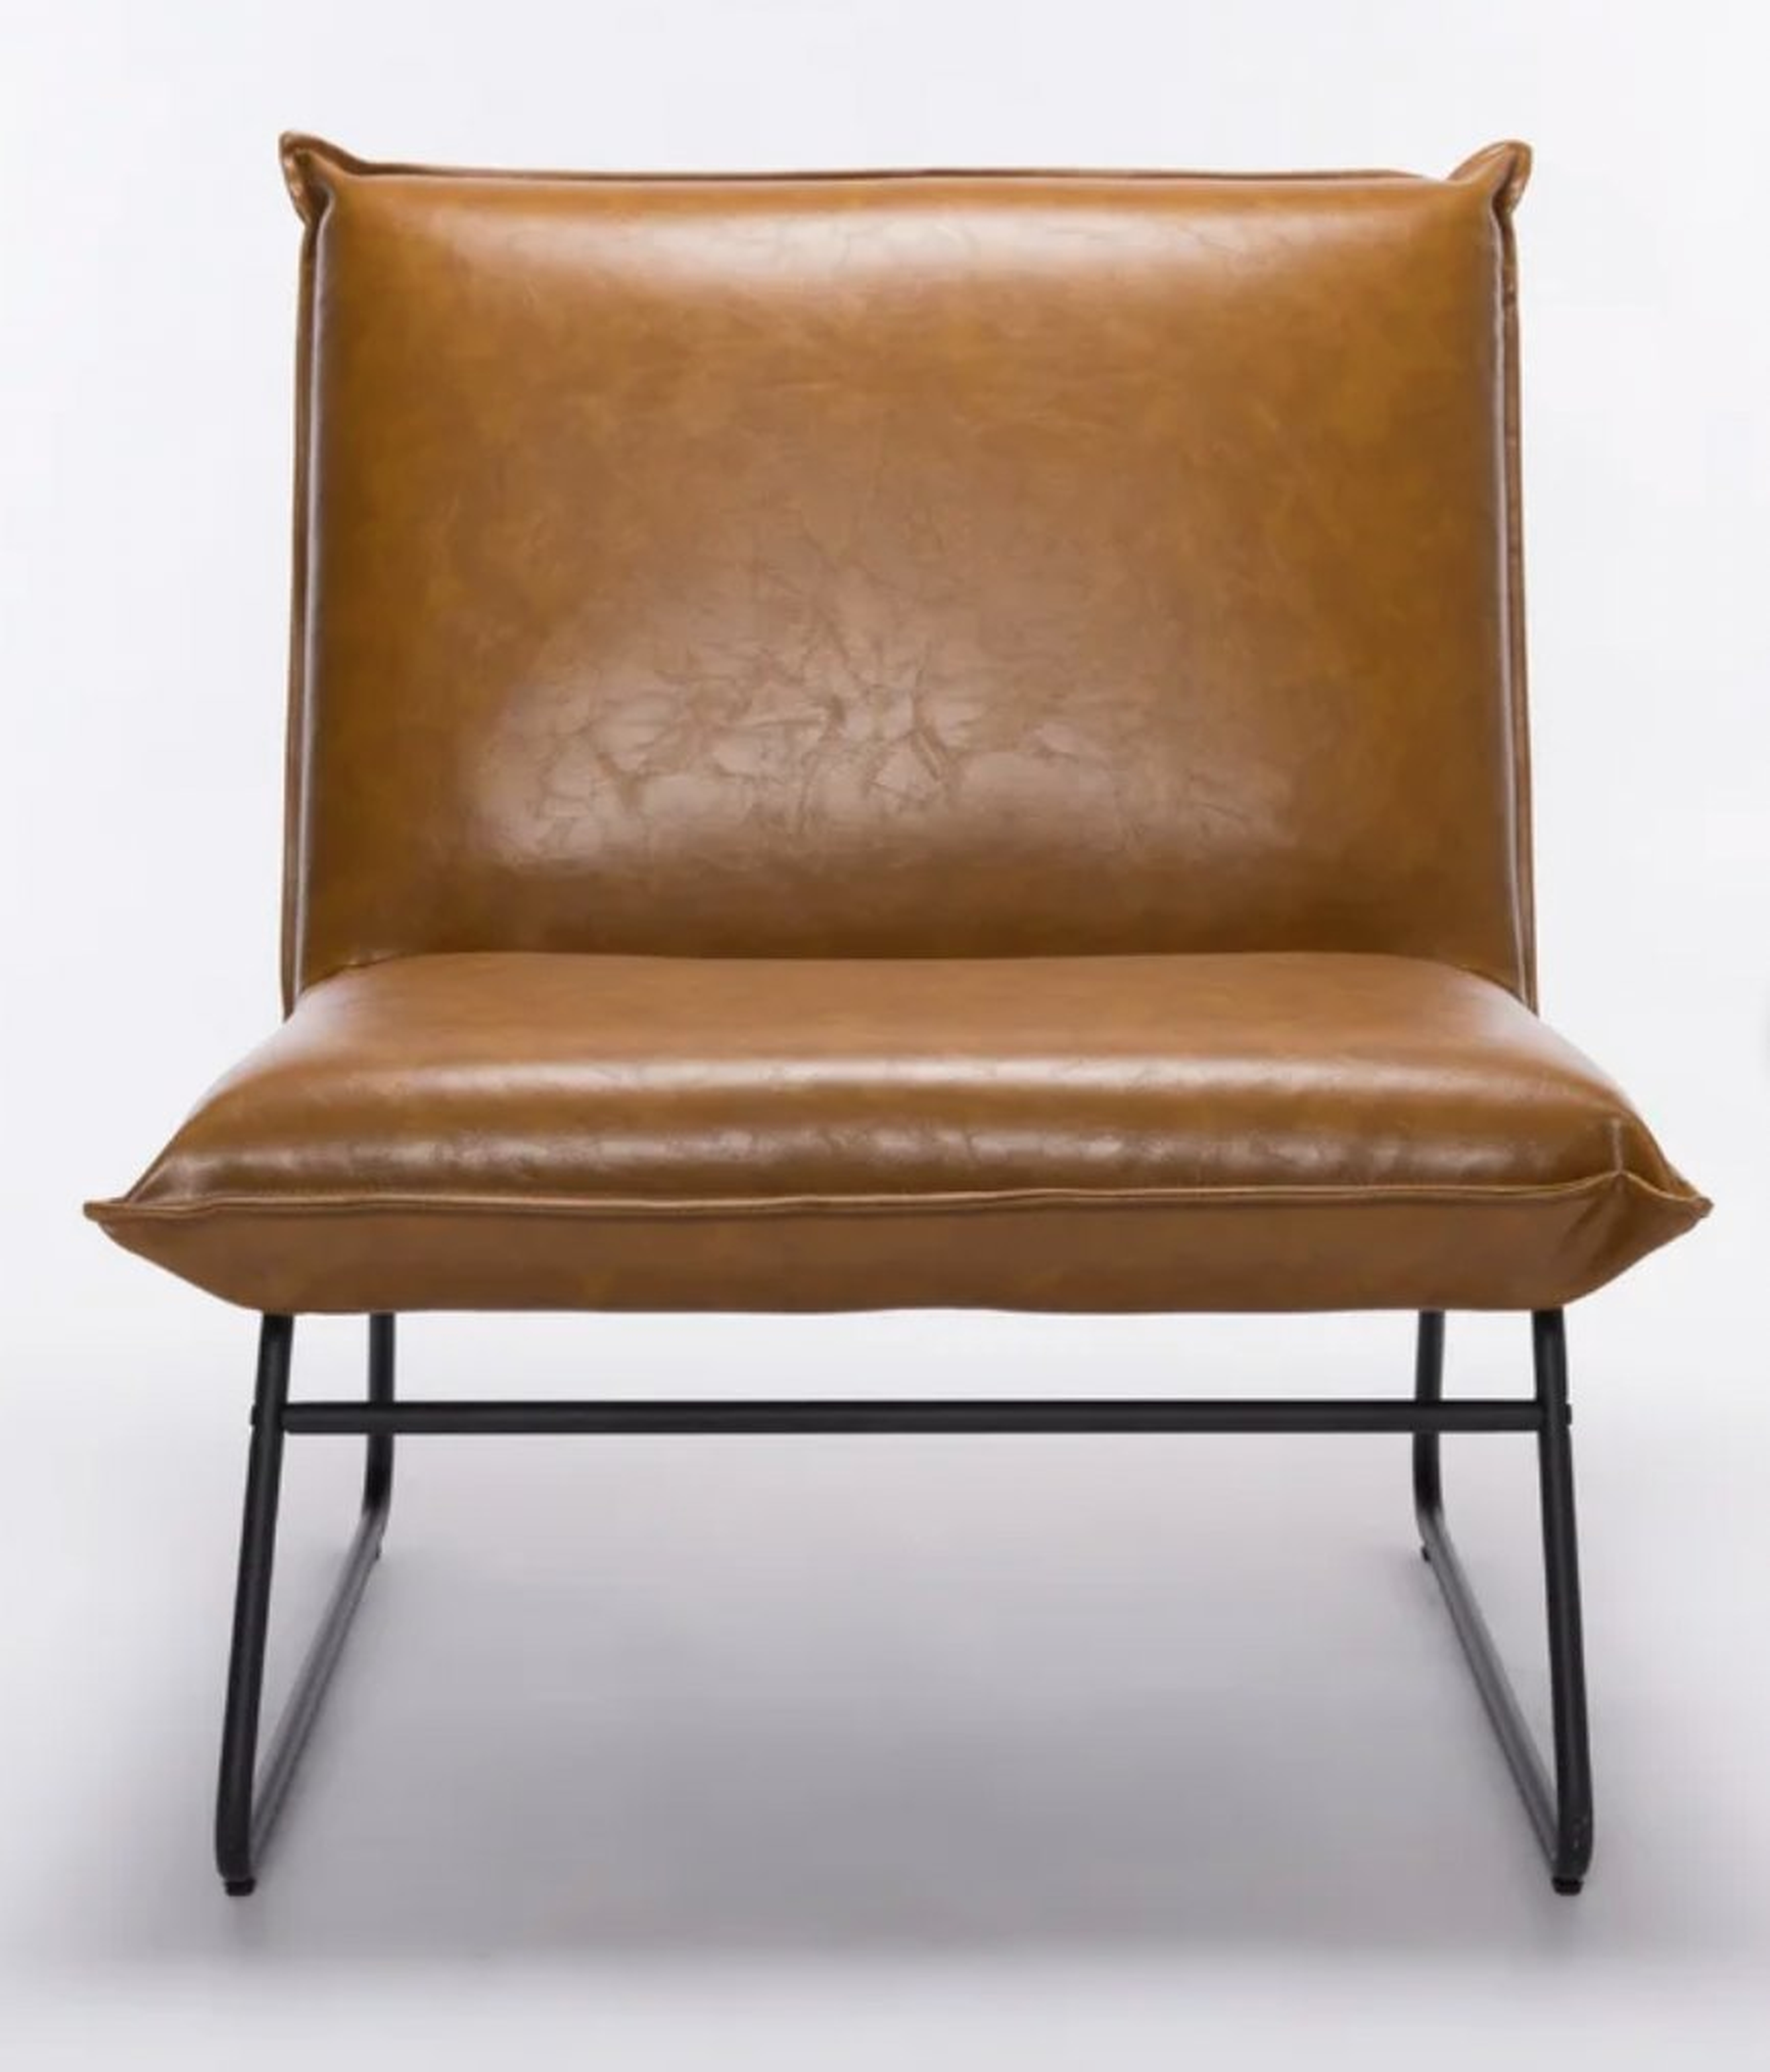 Thebault 28" Wide Slipper Chair - Wayfair